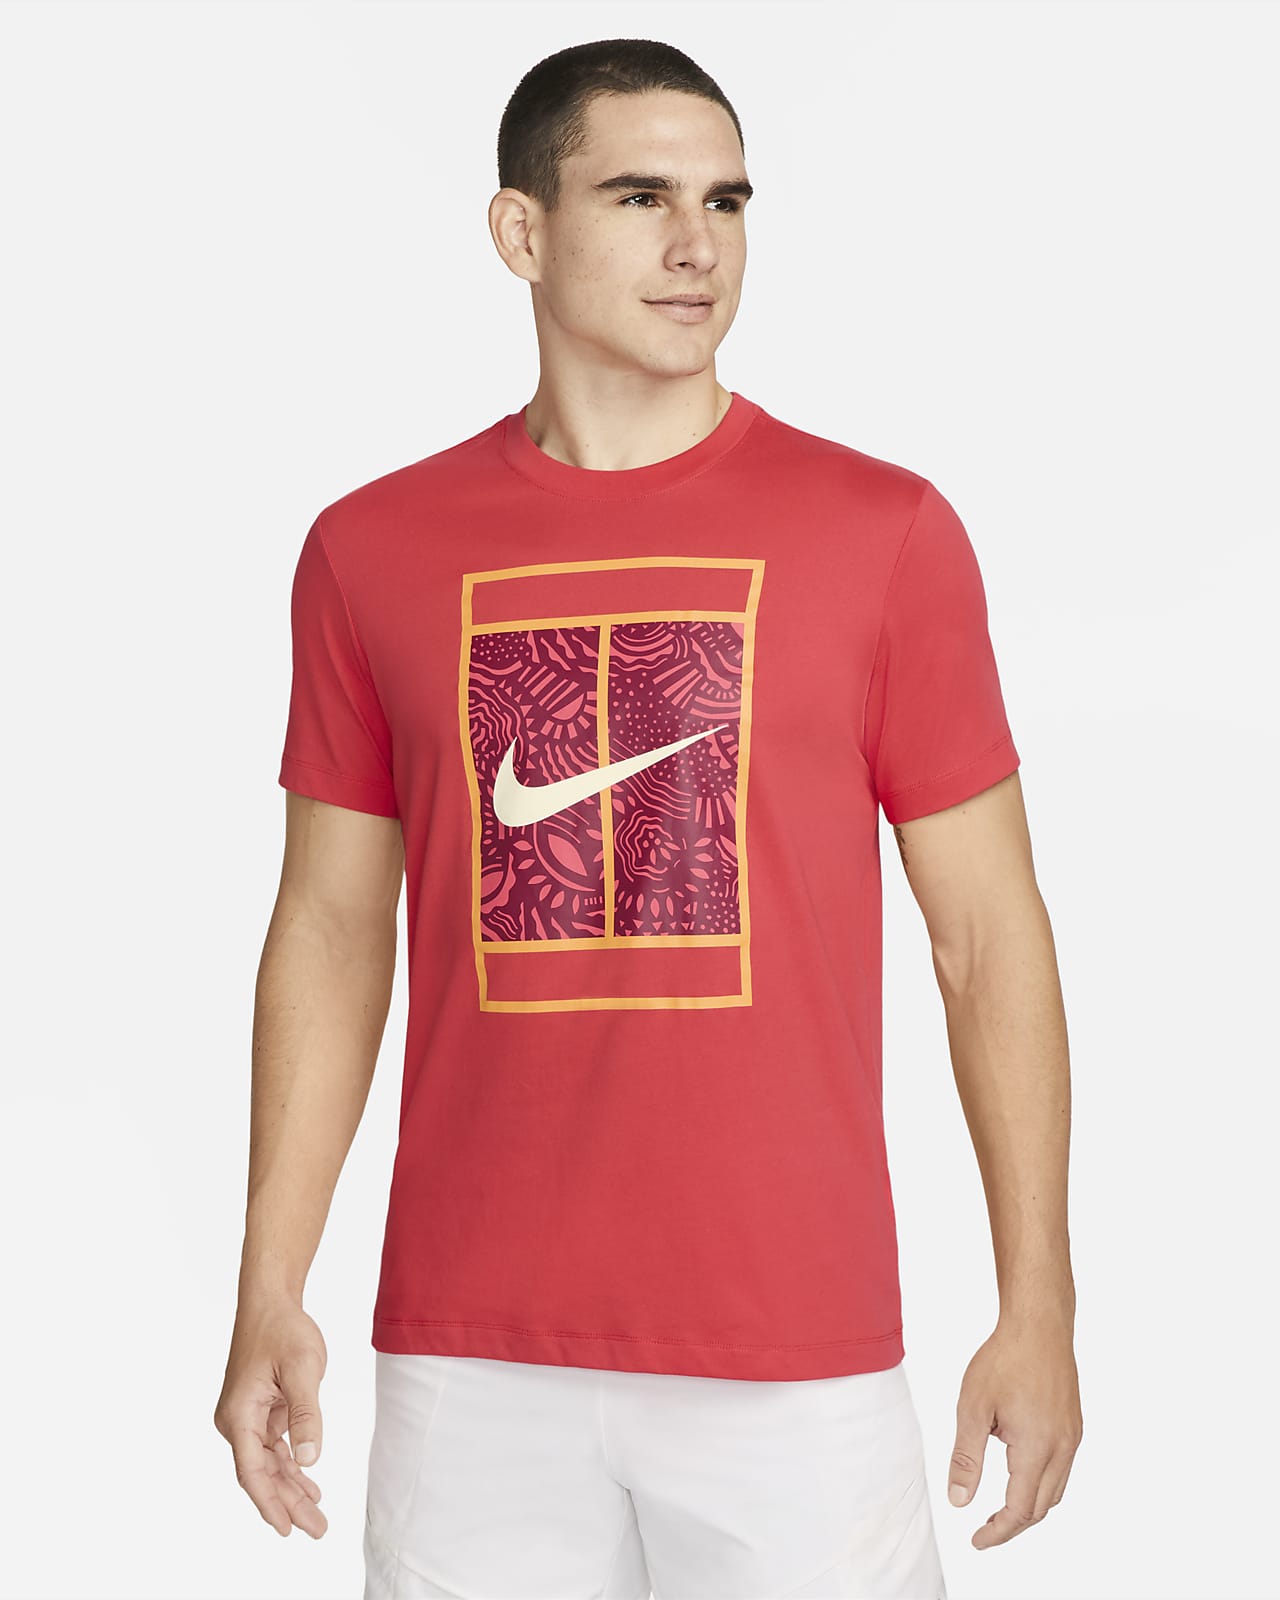 Nike Dri-fit Baseball T-shirt in Red for Men